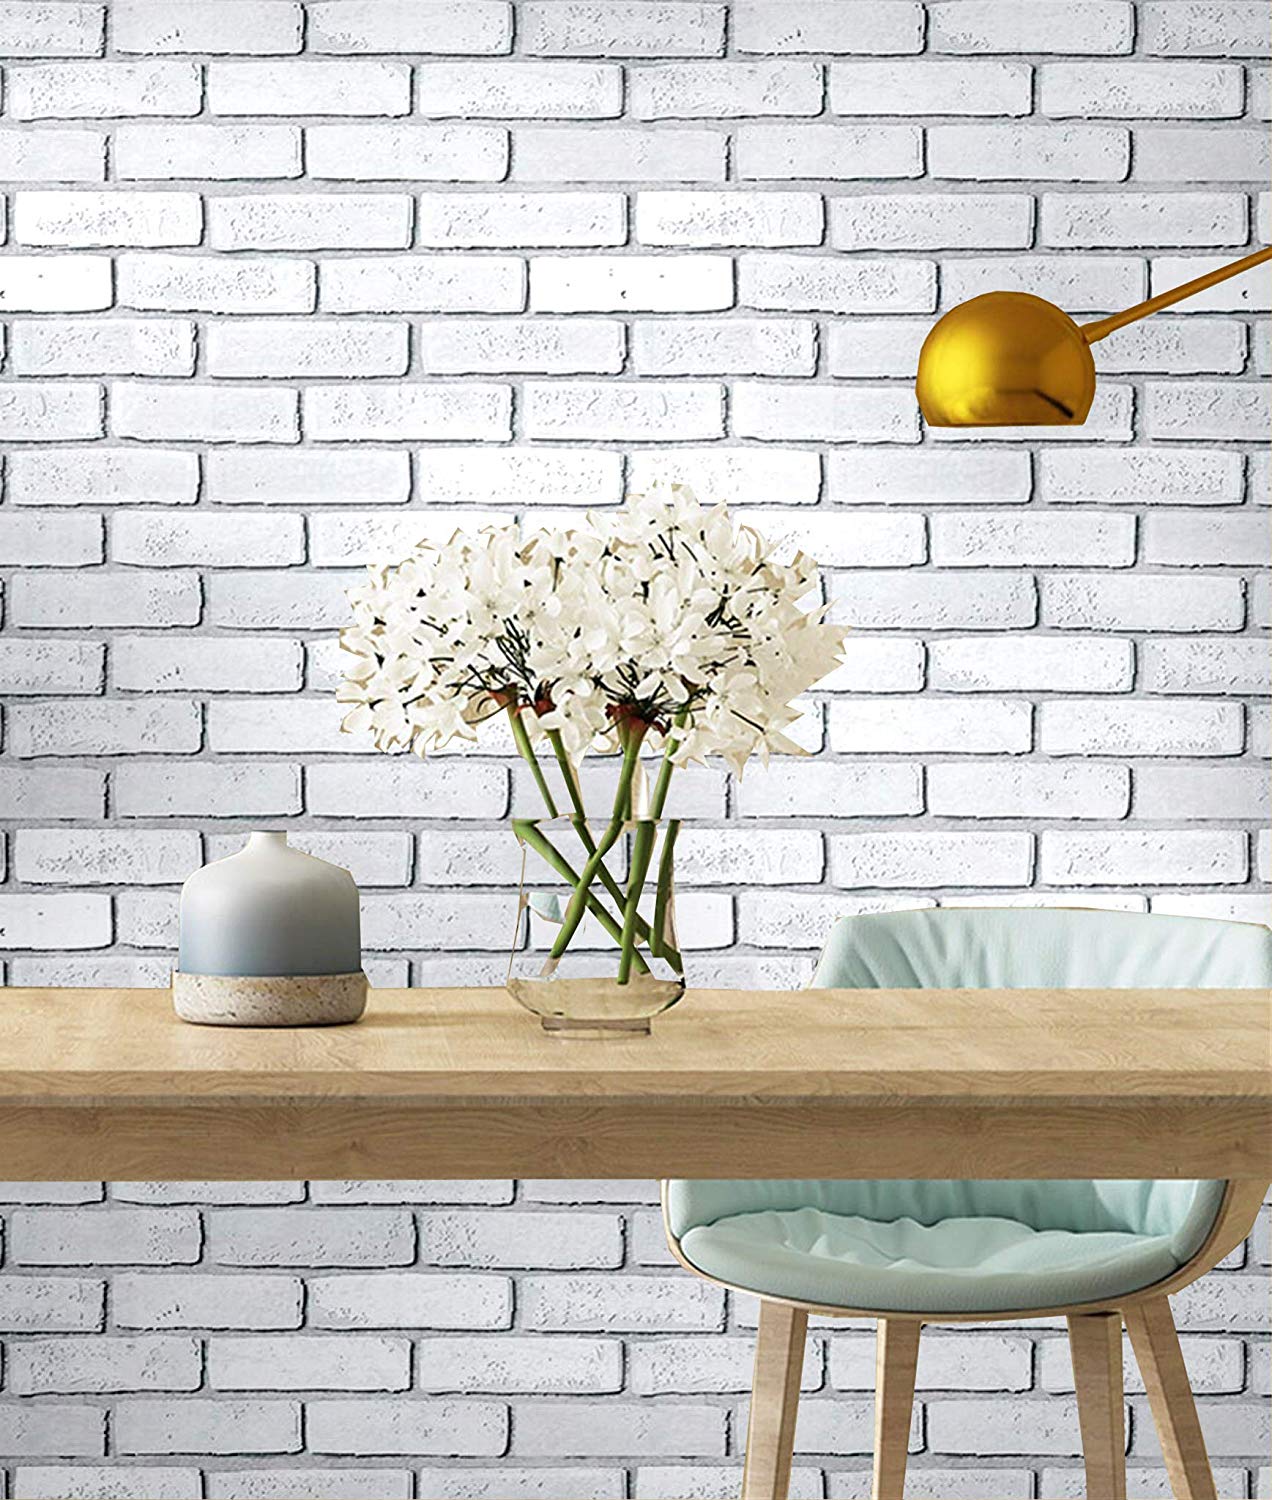 white brick wallpaper,wall,brick,yellow,table,tile